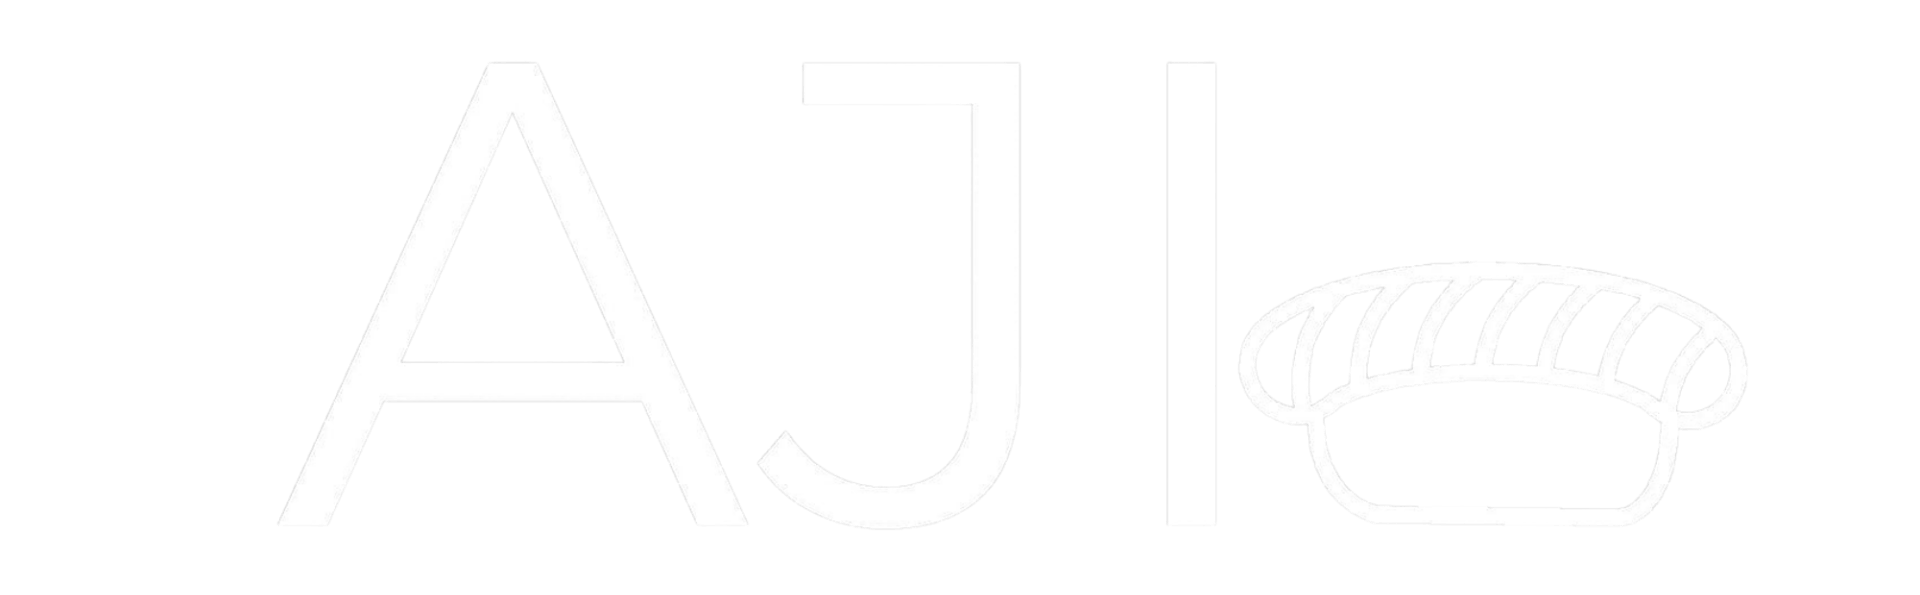 AJI Omakase logo top - Homepage